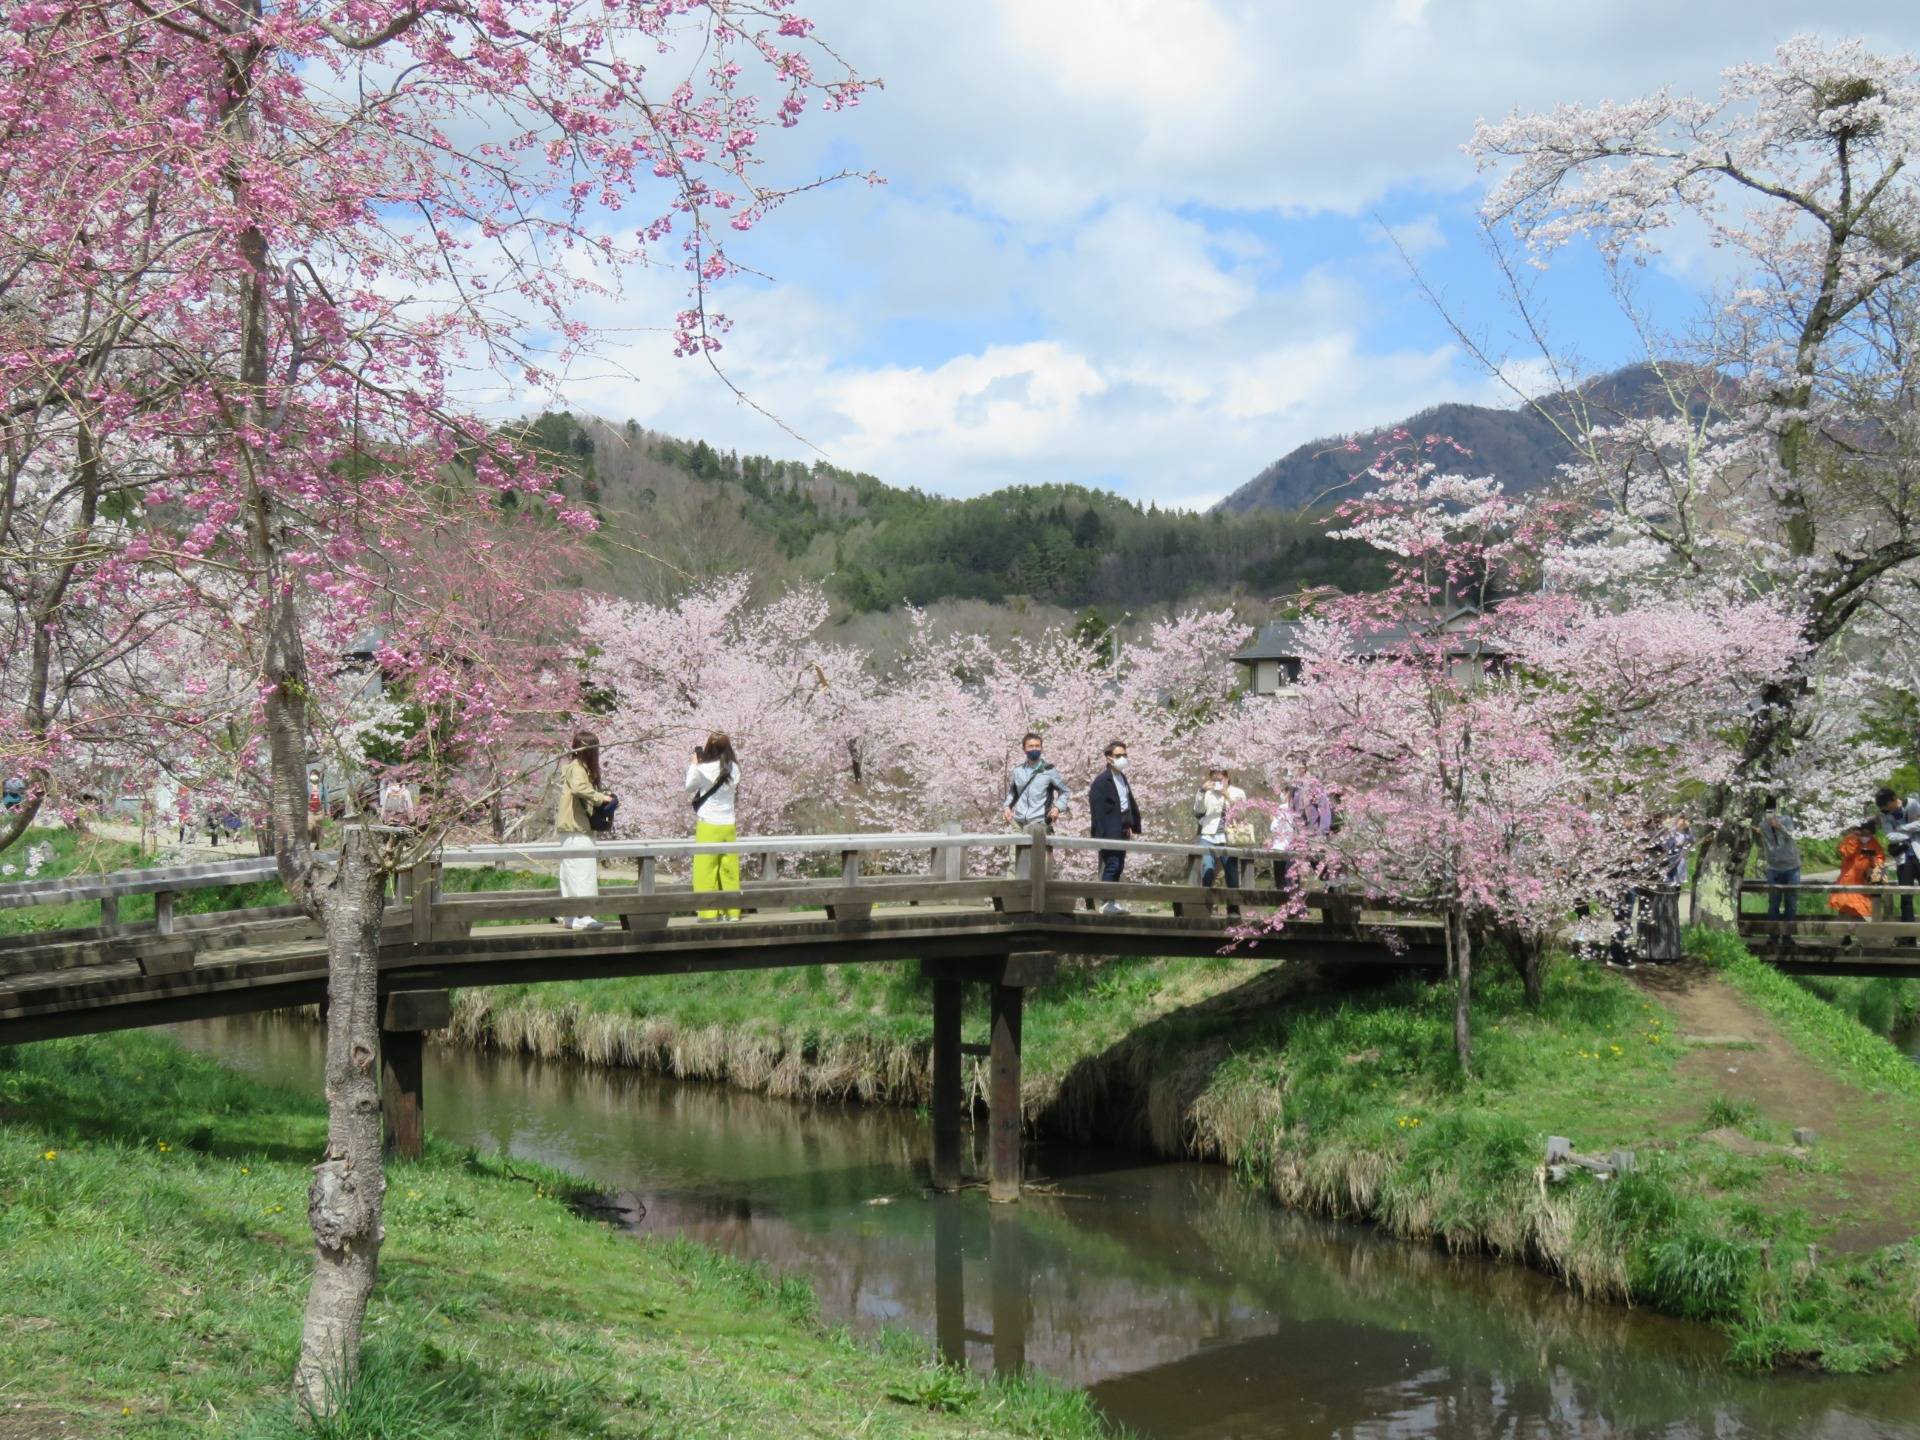 Oshino Village 8 ponds and cherry blossoms.